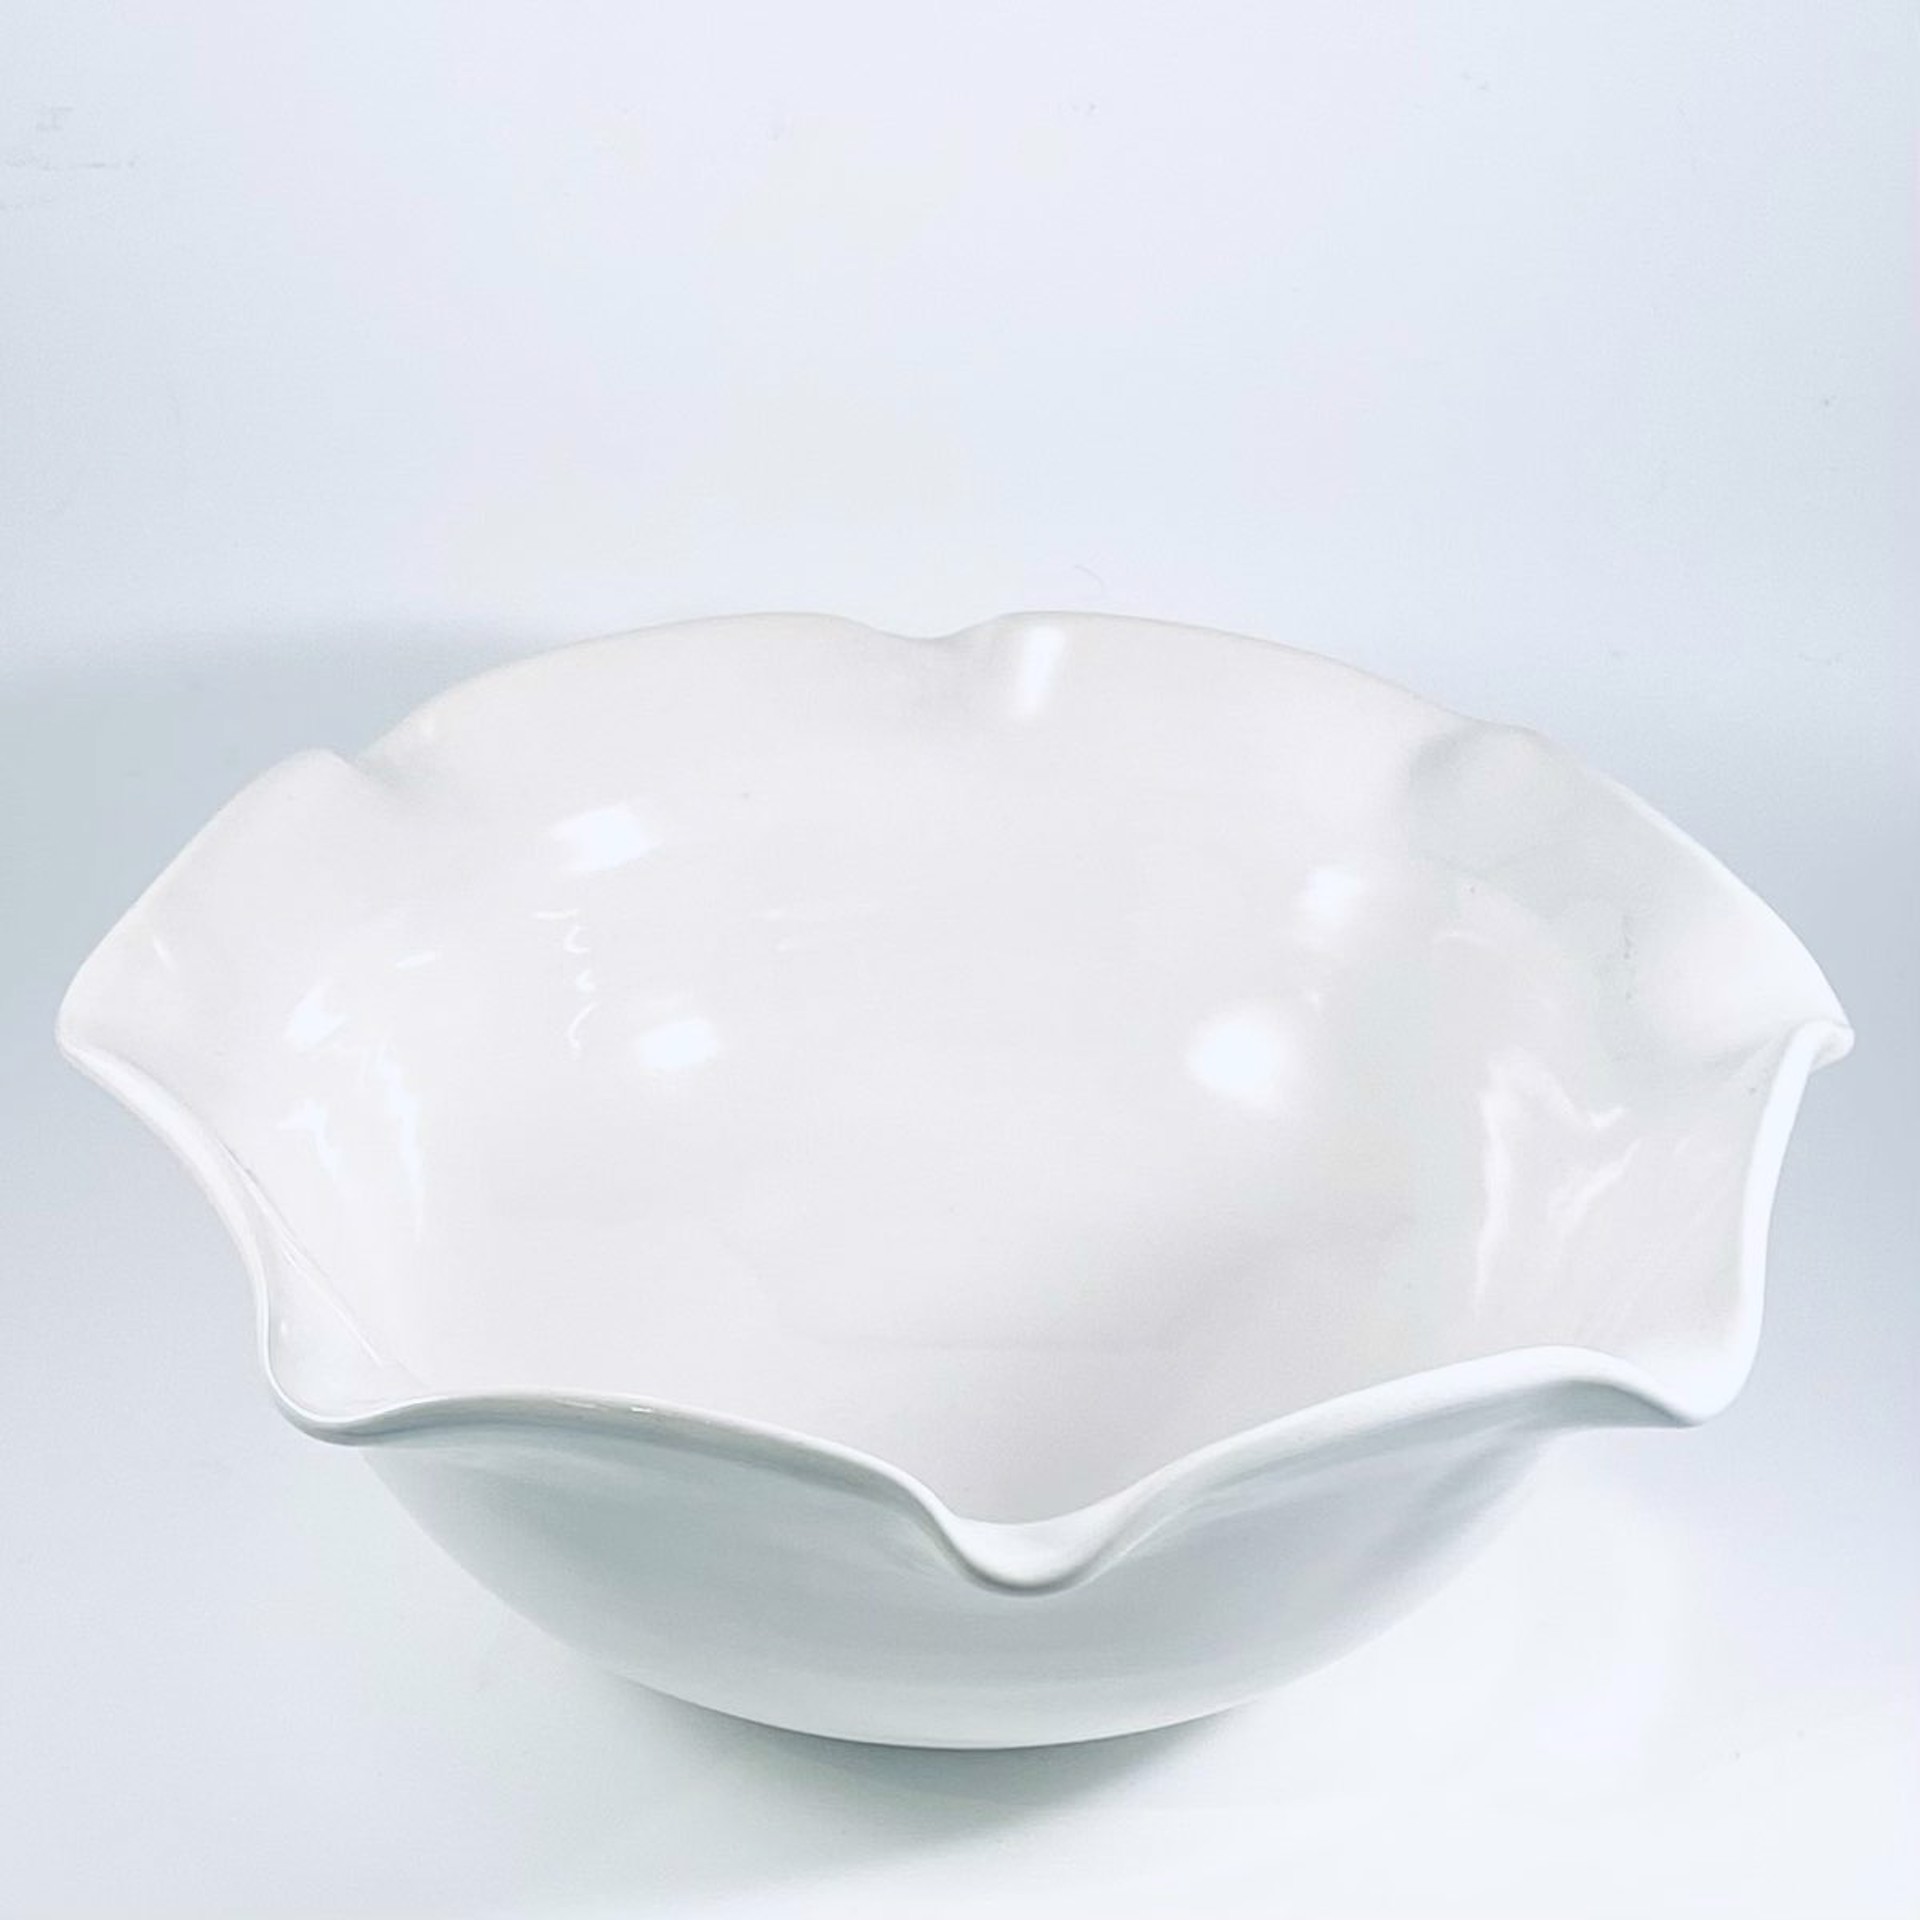 SB21-14 Glossy White Frill Bowl by Silas Bradley